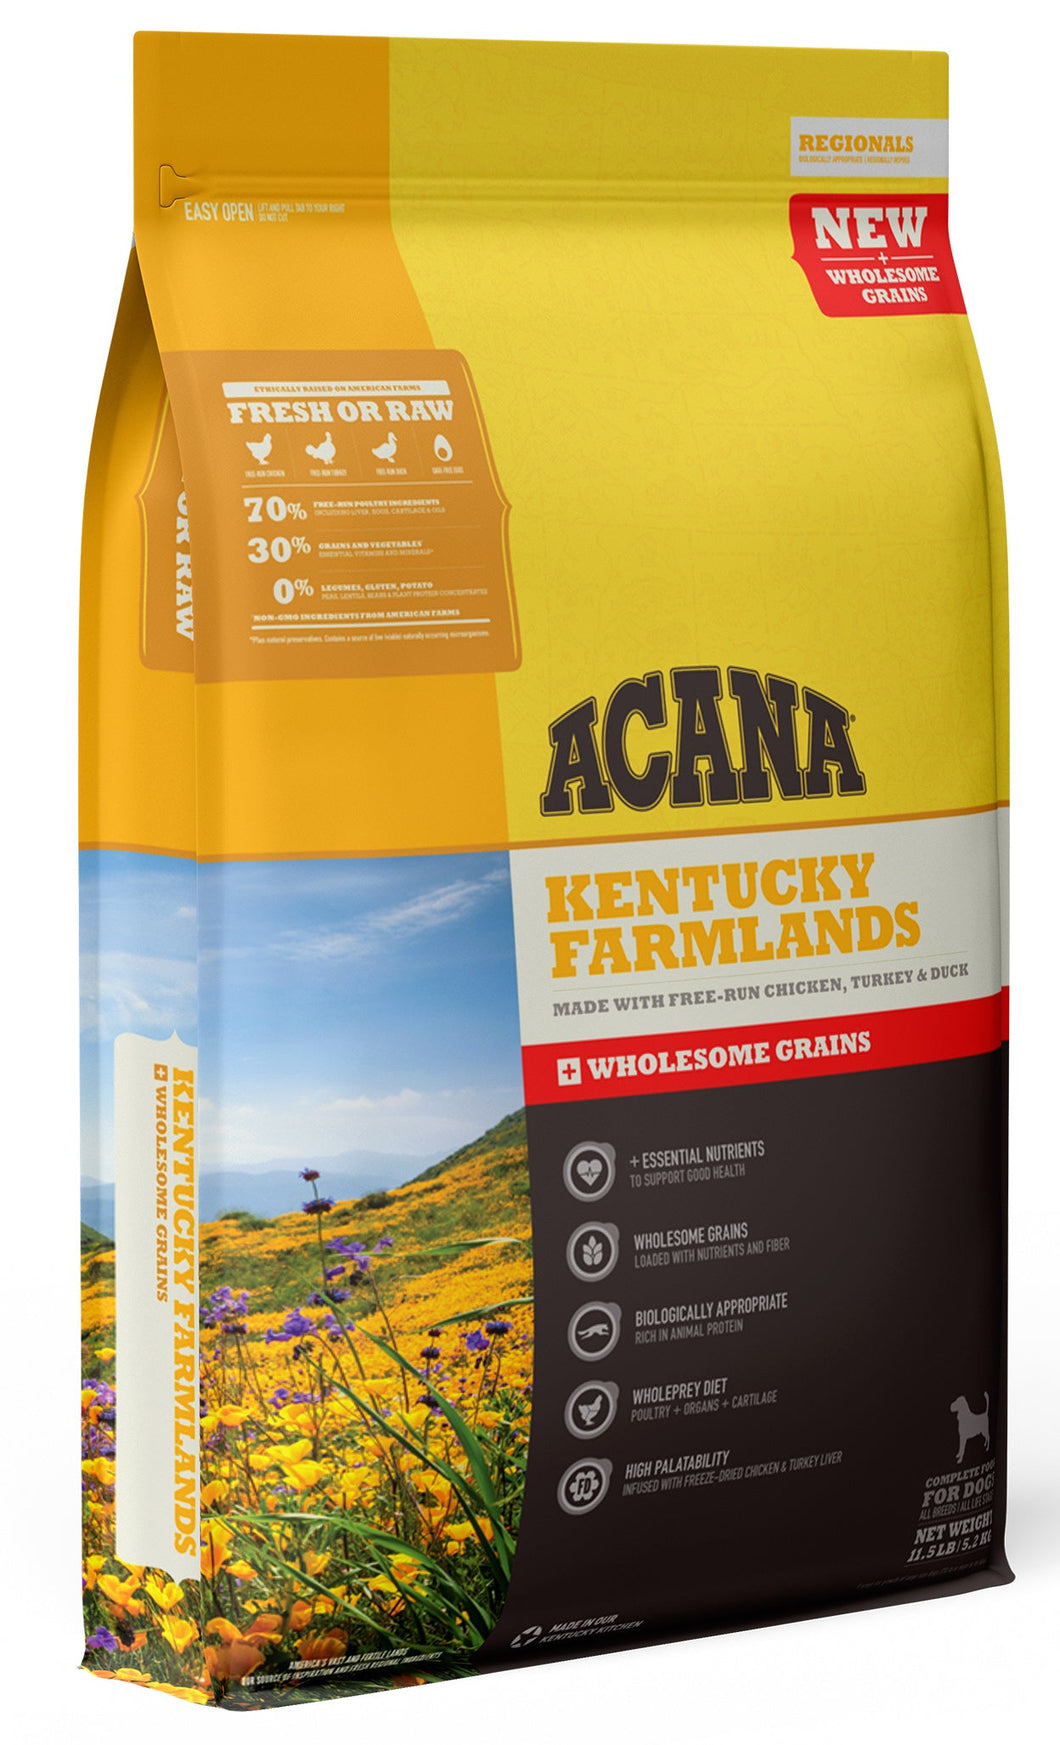 ACANA Wholesome Grains Kentucky Farmlands Dog Food